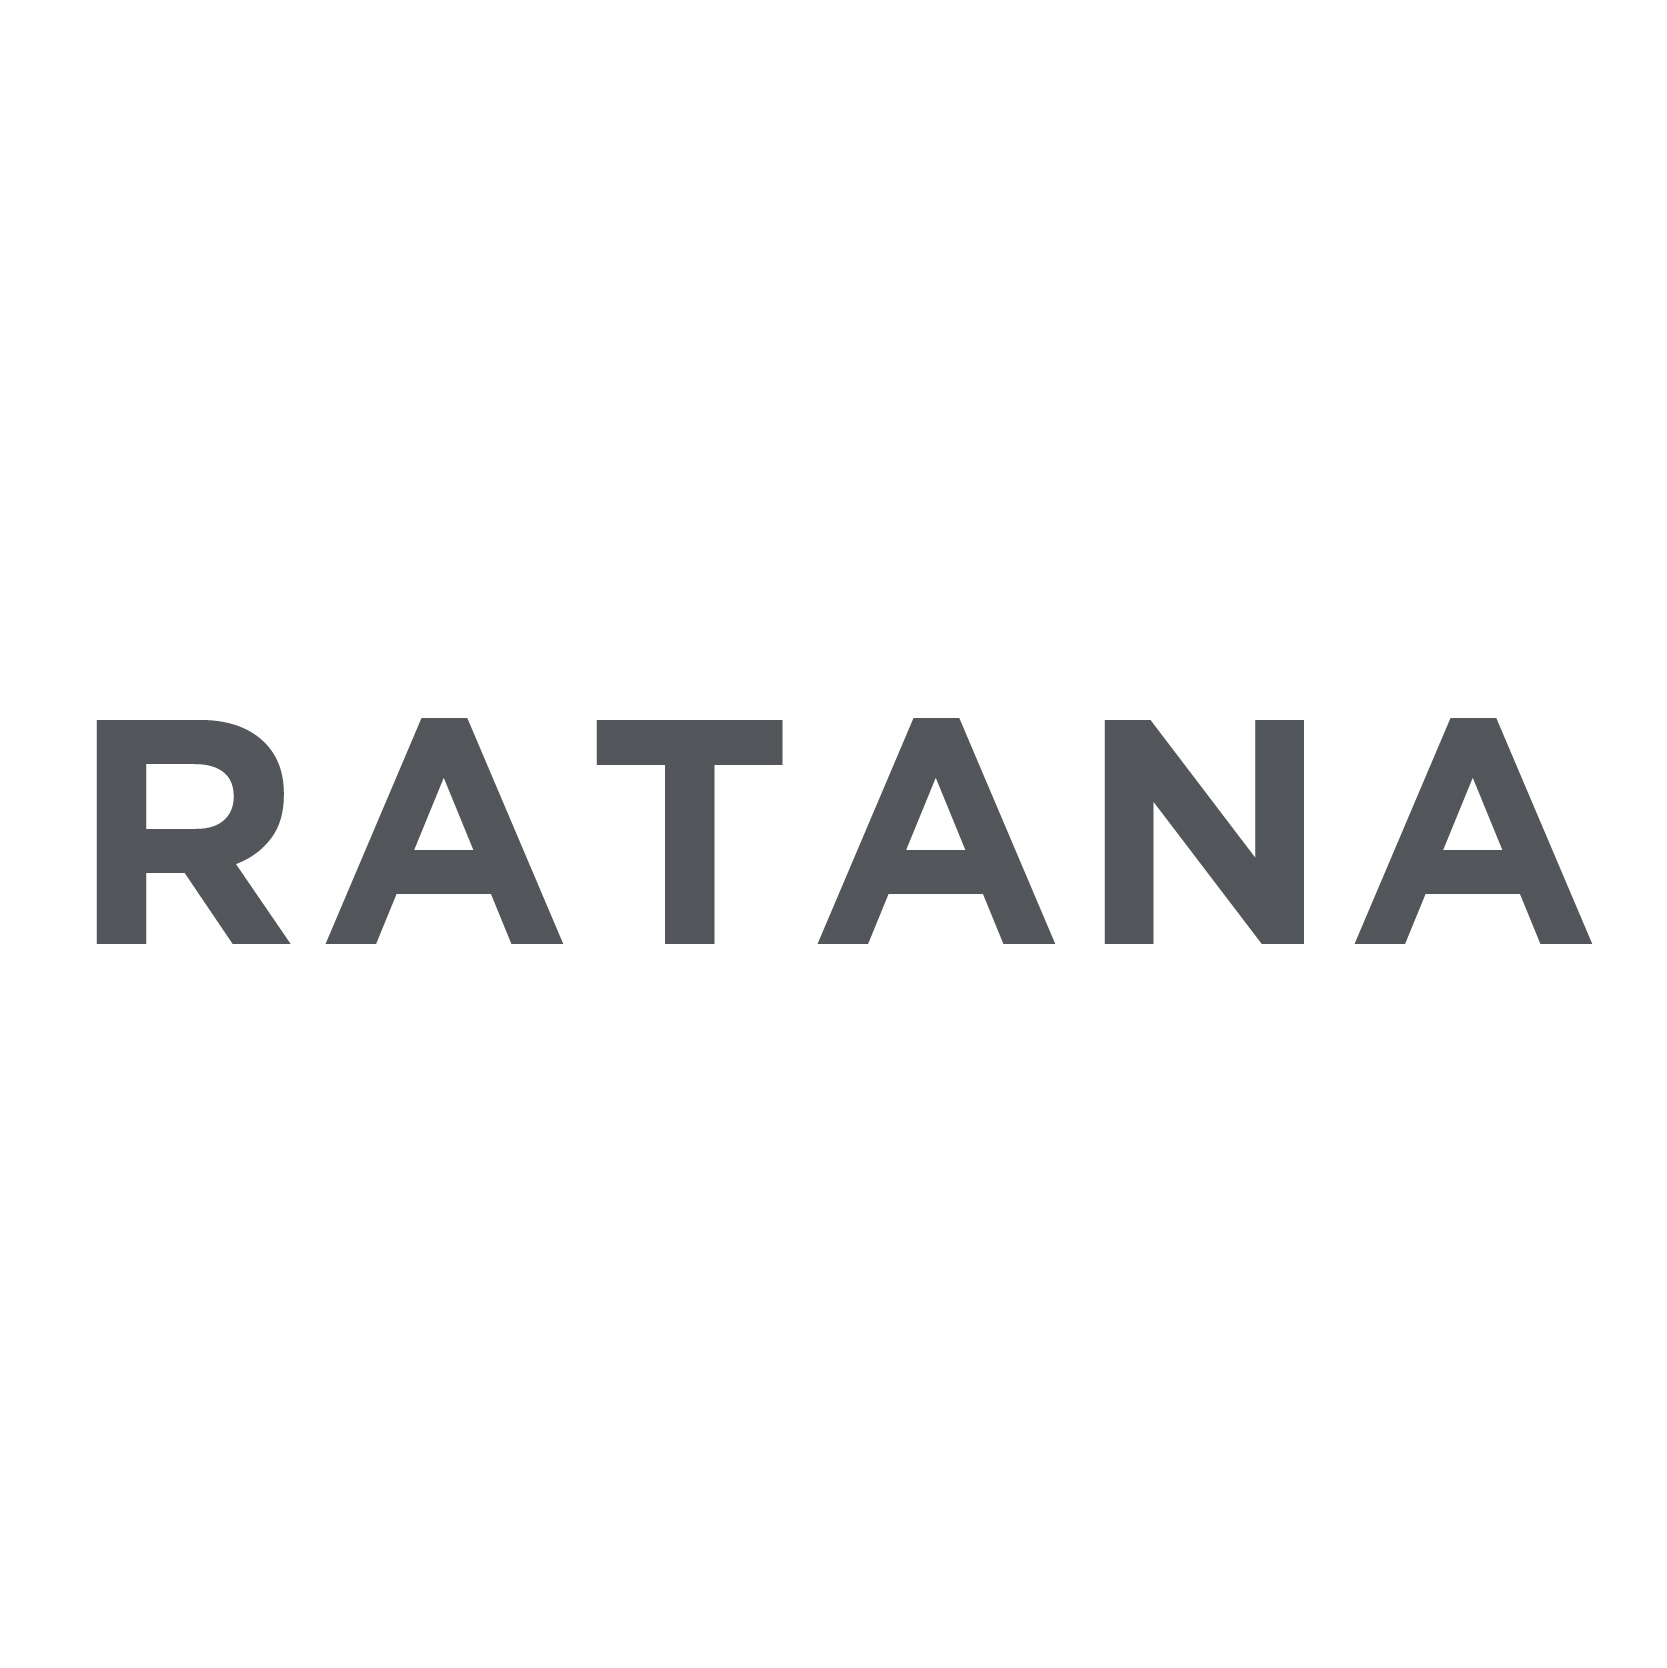 Ratana Logo